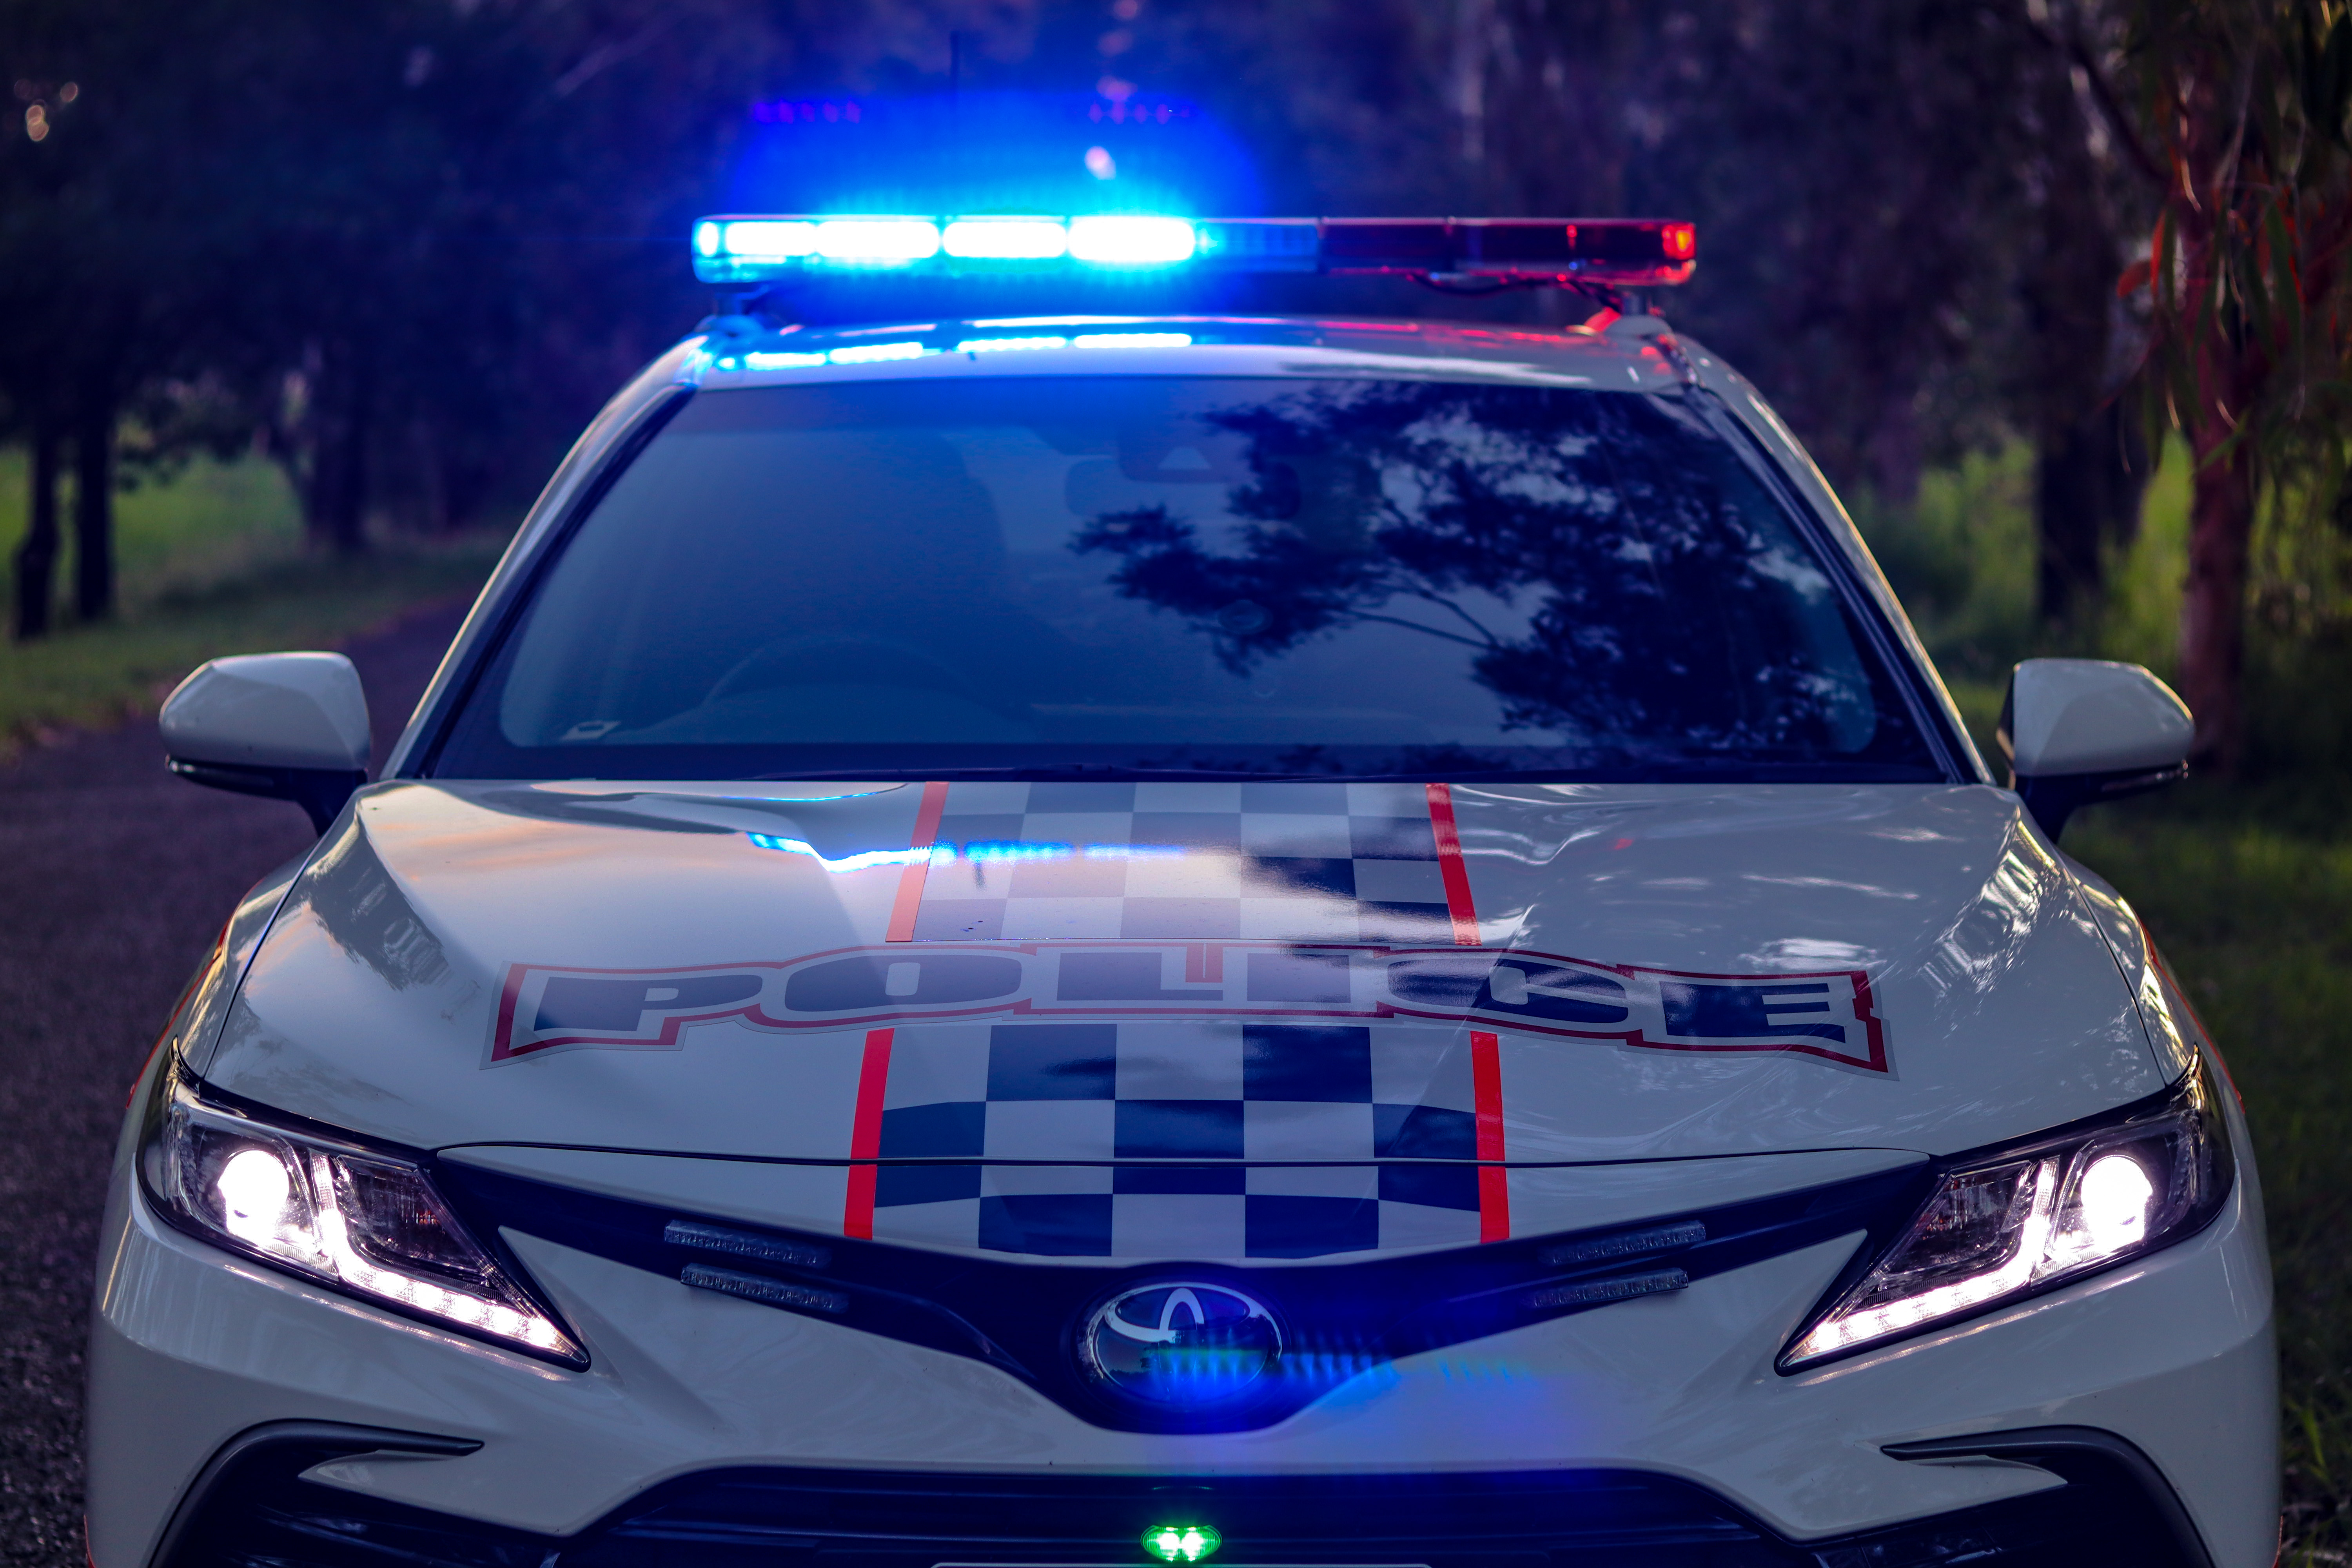 police vehicle with flashing lights